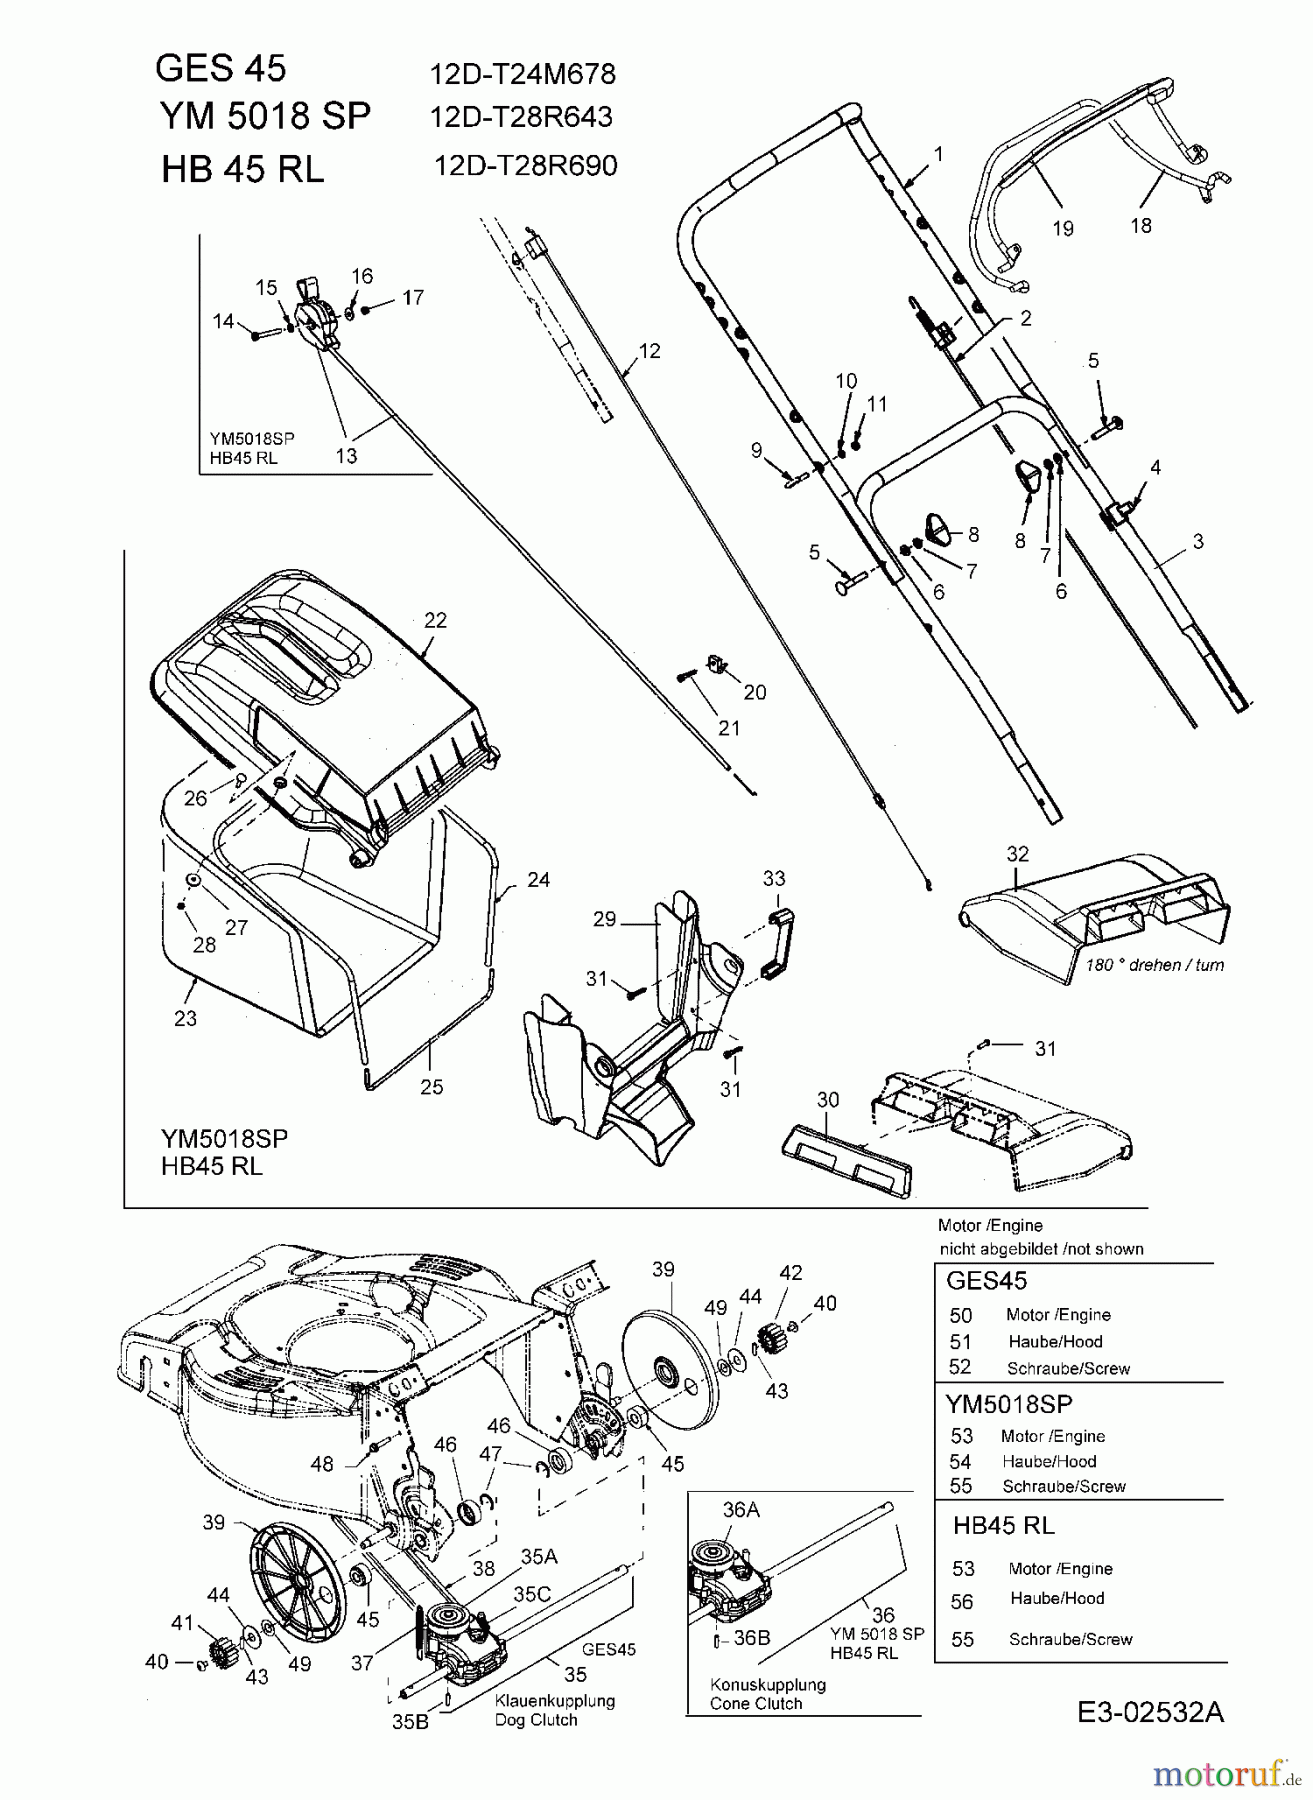  Yard-Man Motormäher mit Antrieb YM 5018 SP 12D-T28R643  (2005) Getriebe, Grasfangsack, Holm, Motor